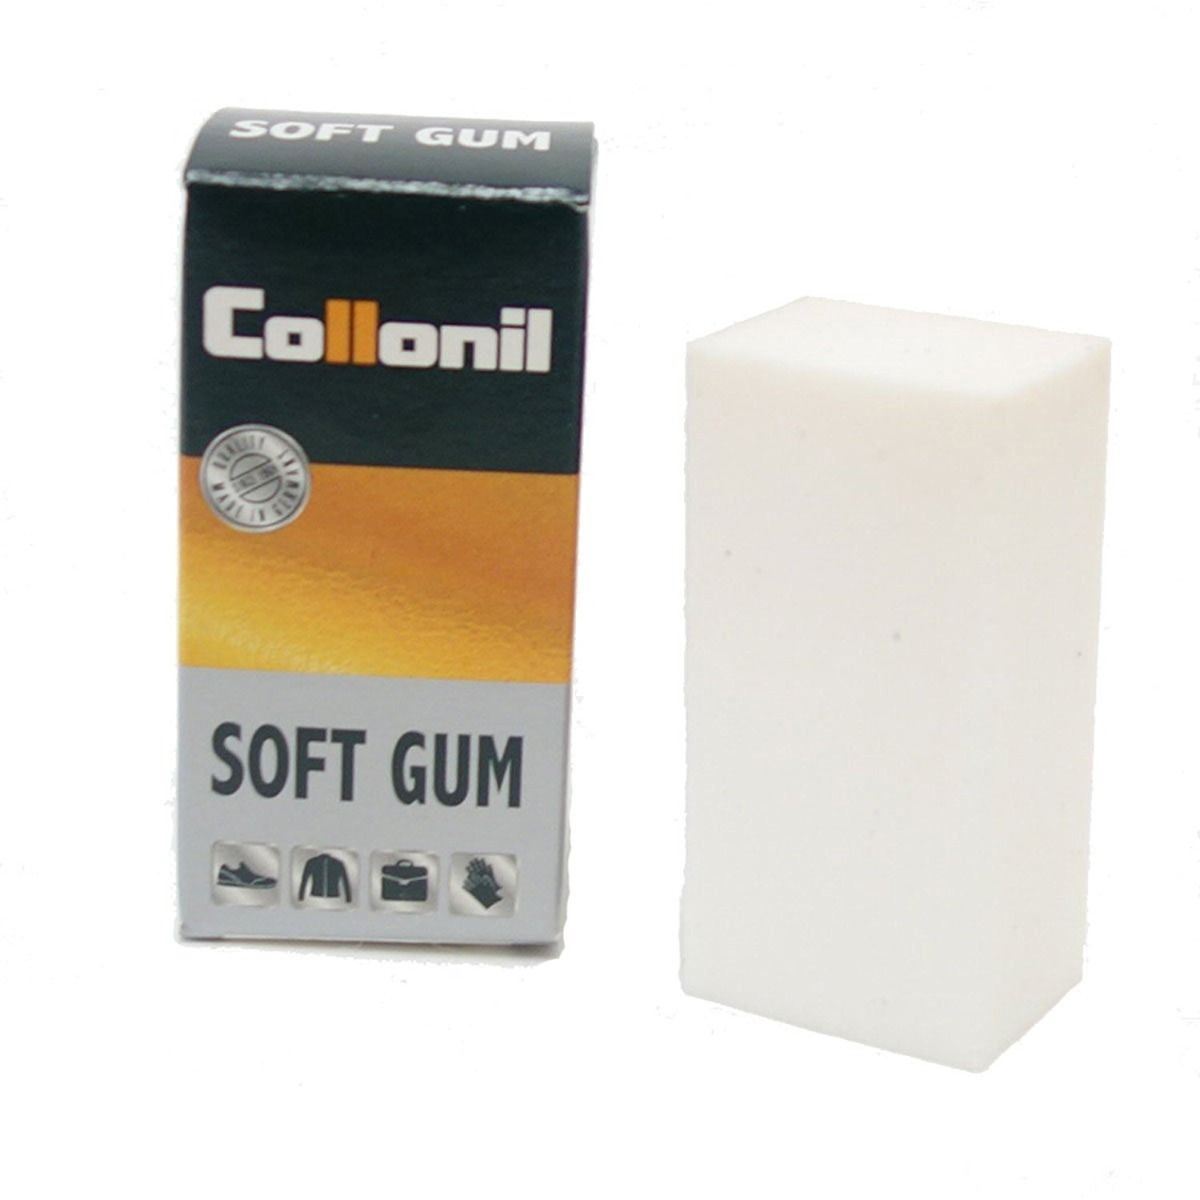 Collonil Classic Suede/Nubuck Cleaner Gum Rubber Block - image 2 of 2